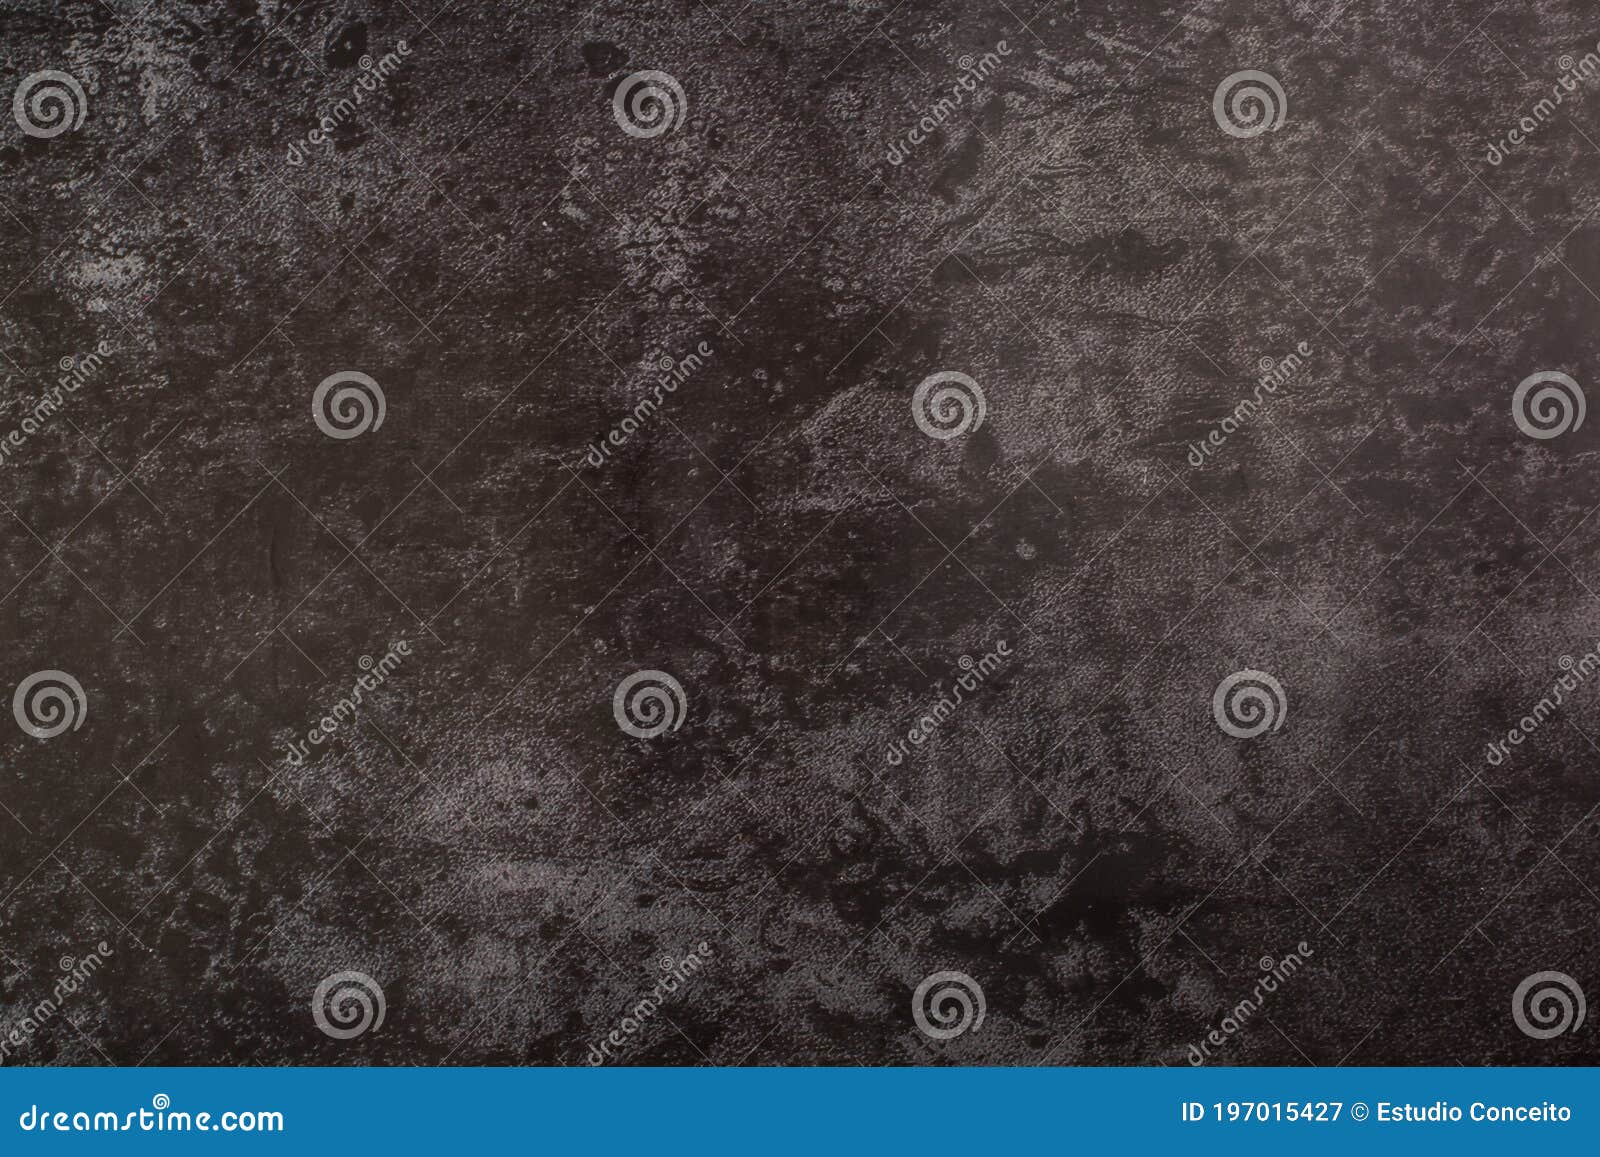 dark gray background texture. abstrato background